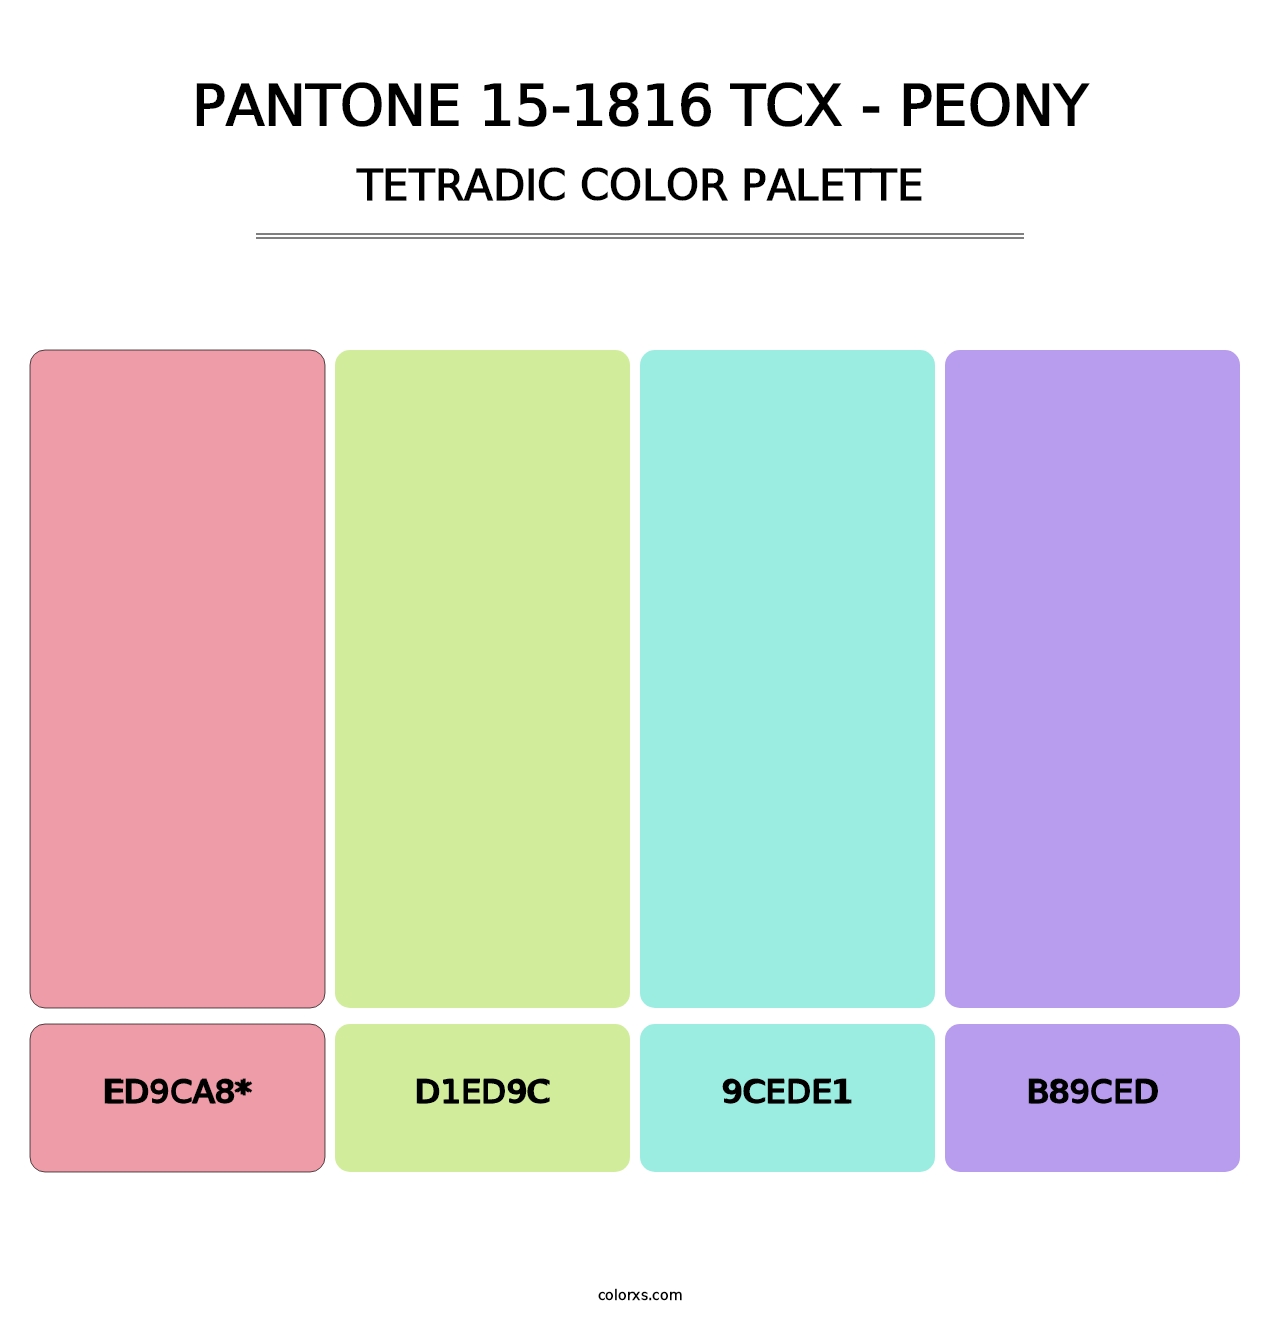 PANTONE 15-1816 TCX - Peony - Tetradic Color Palette